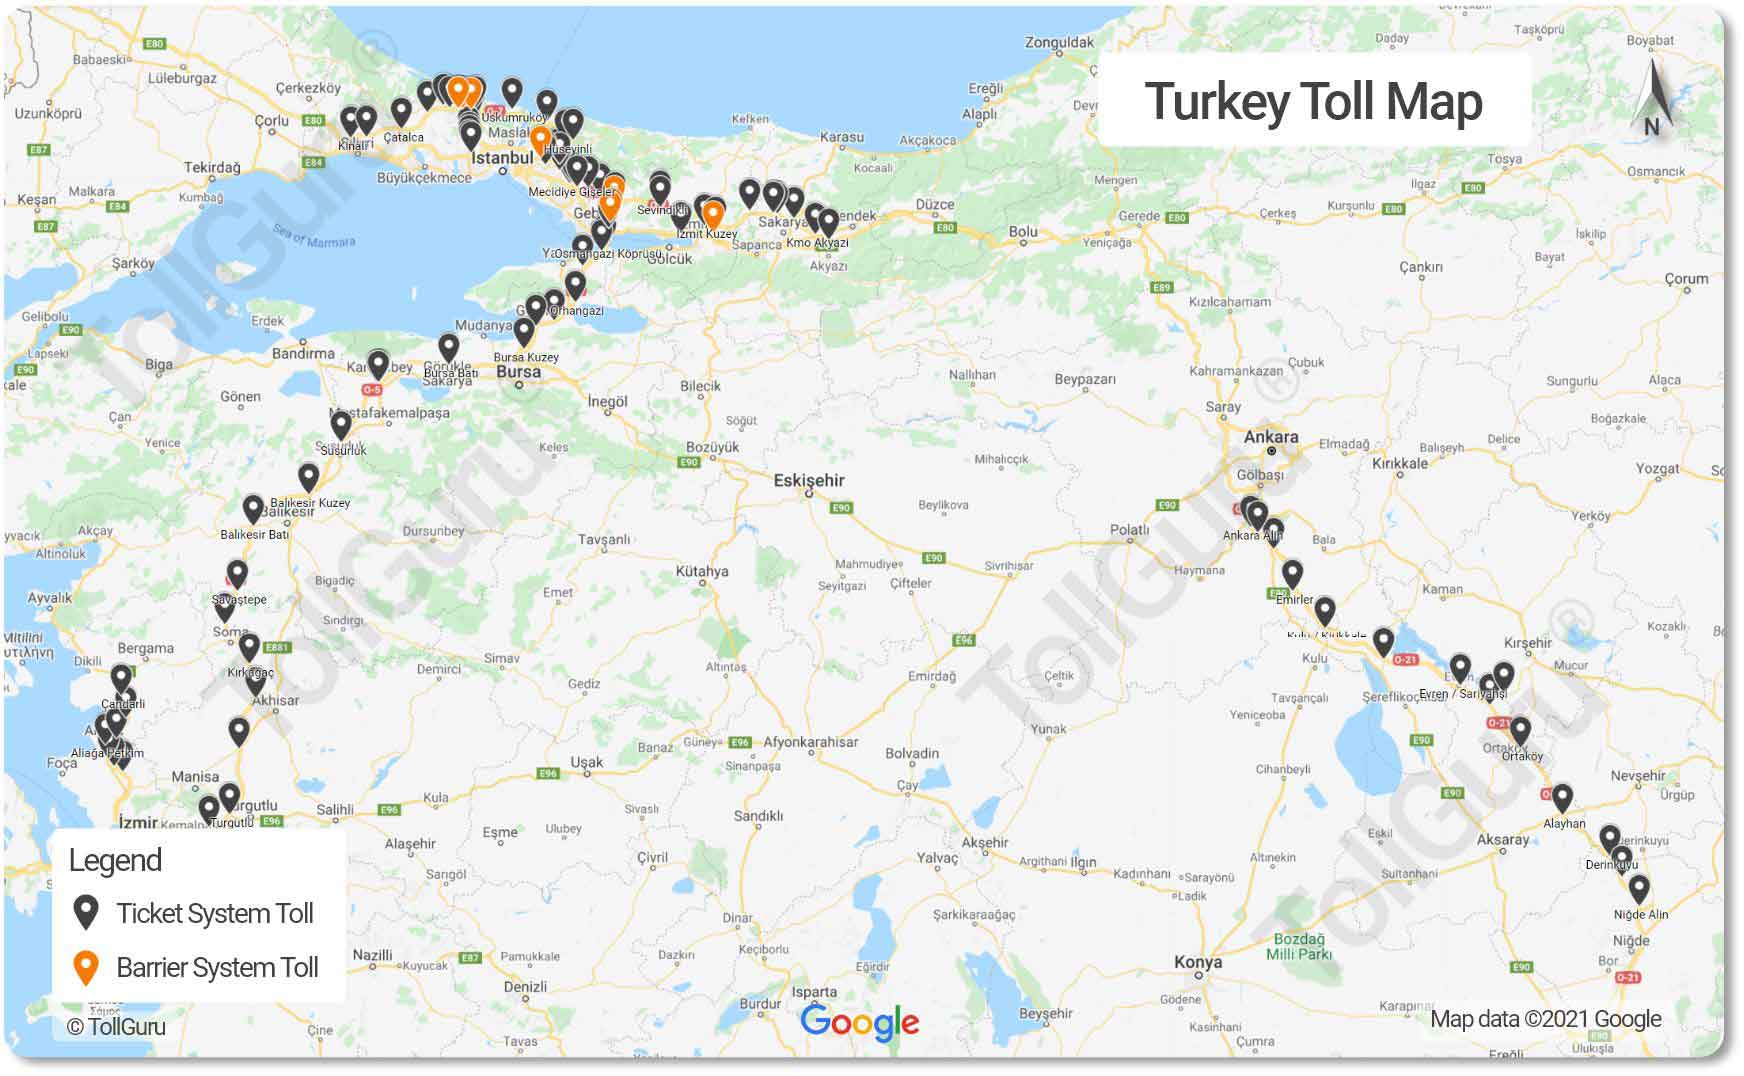 The toll plazas in Turkey for all the highways and bridges including Bosphorus Bridge and Osmangazi Bridge.